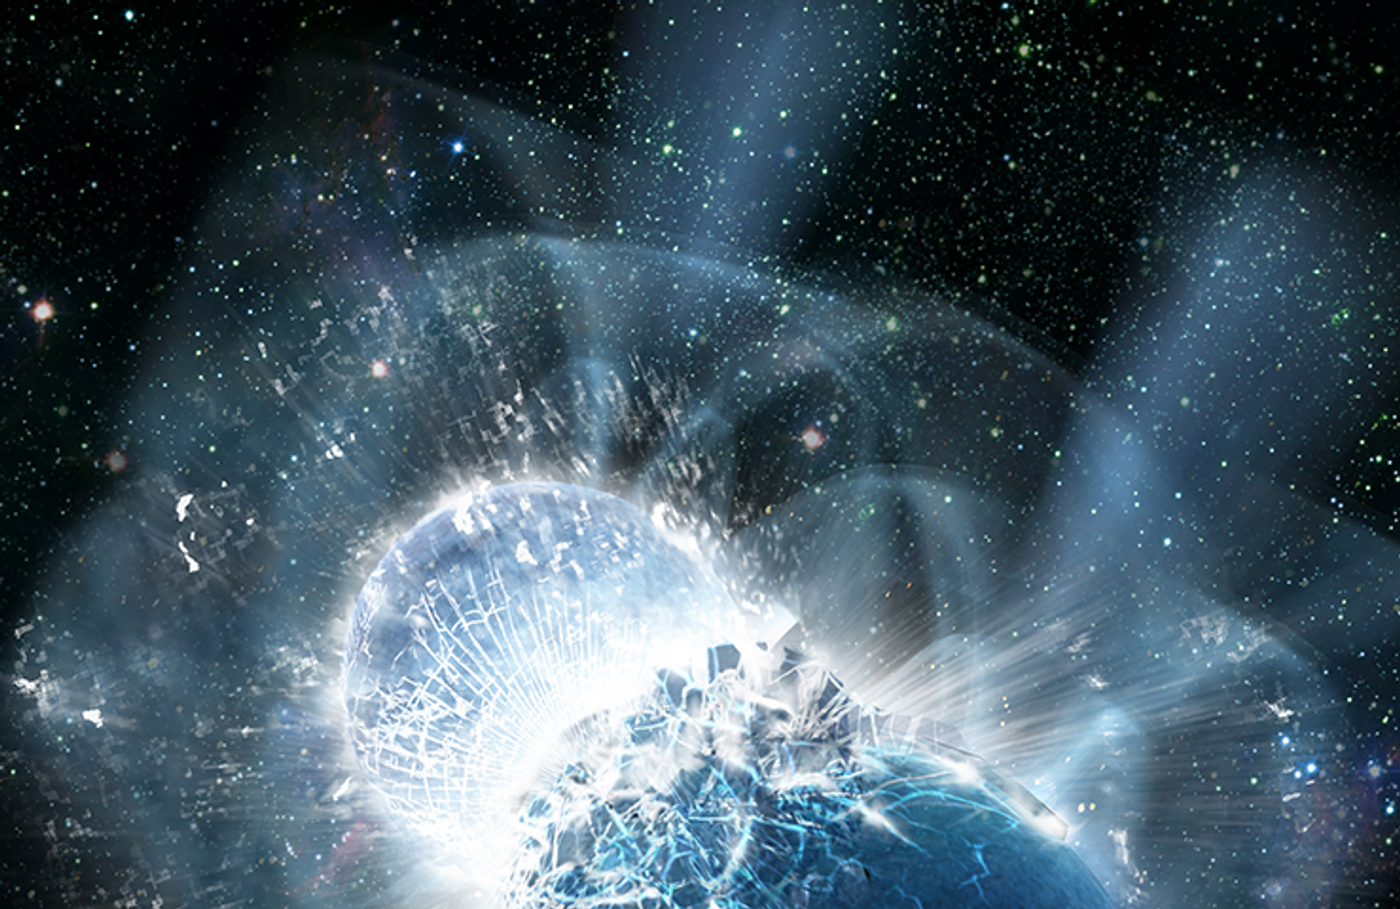 An artist's impression of two neutron stars colliding.